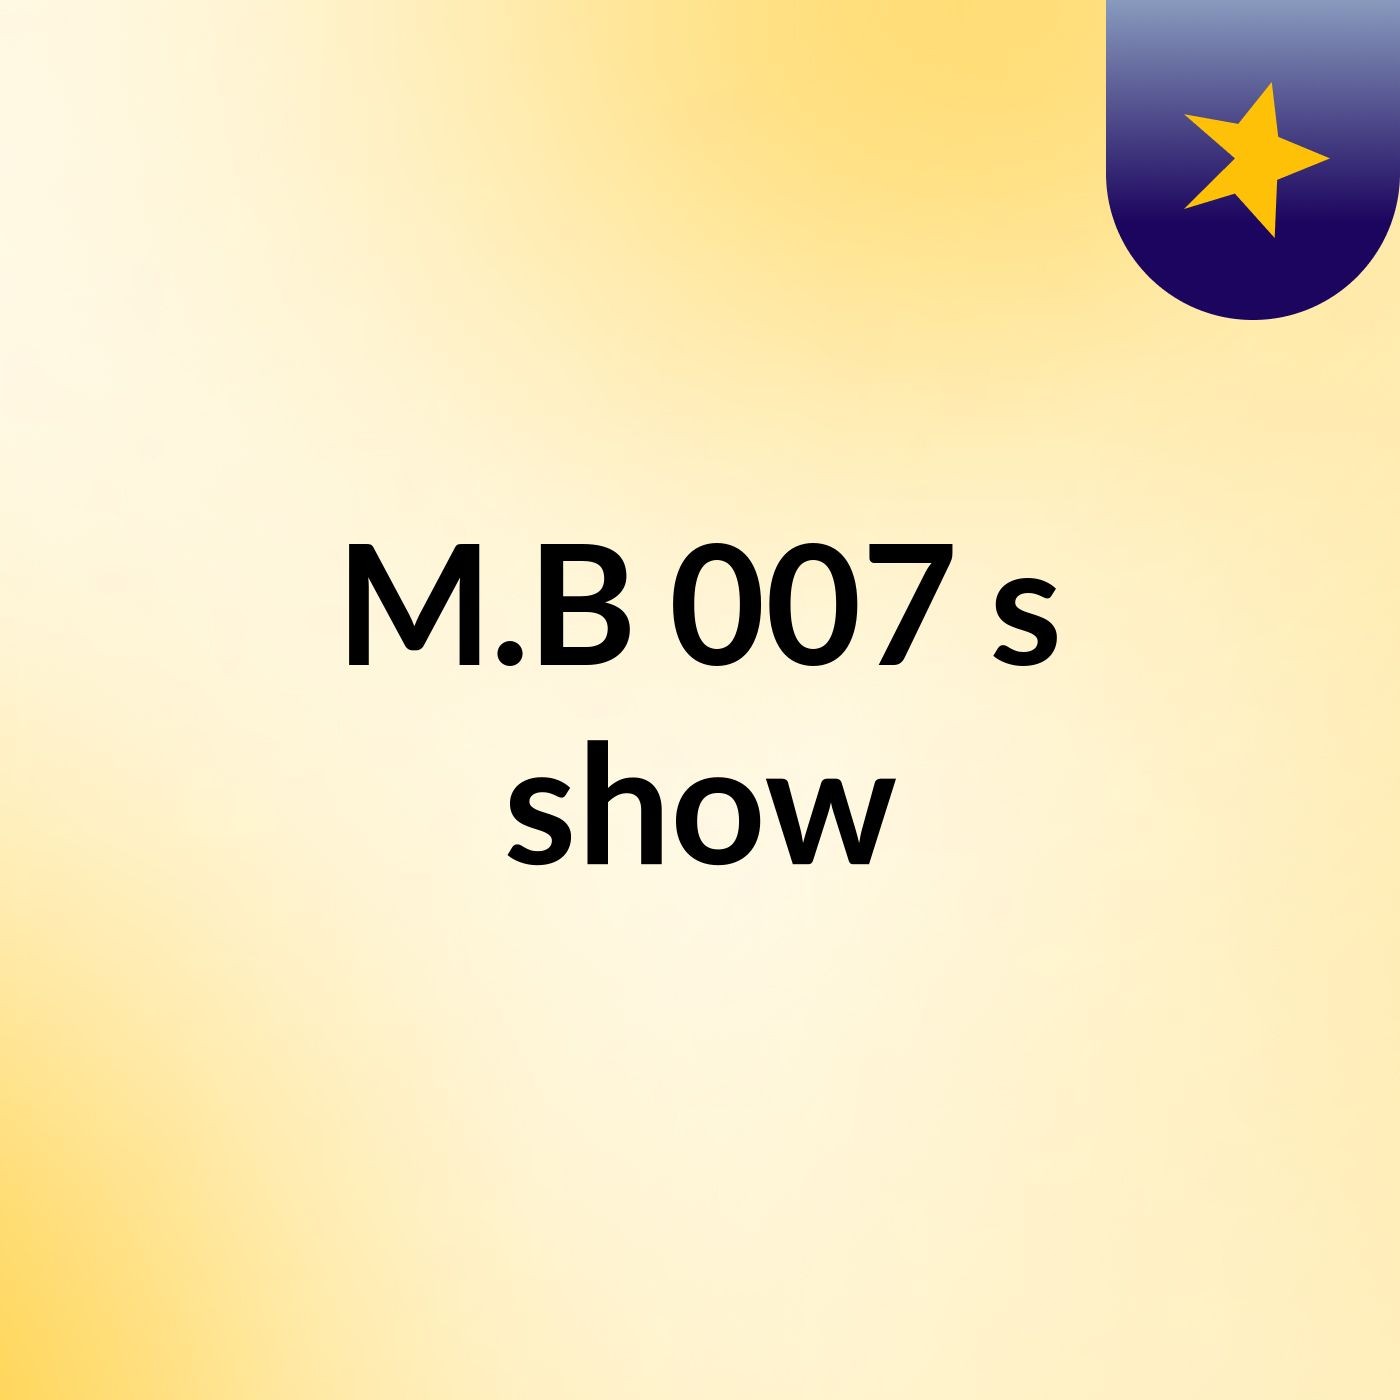 M.B 007's show